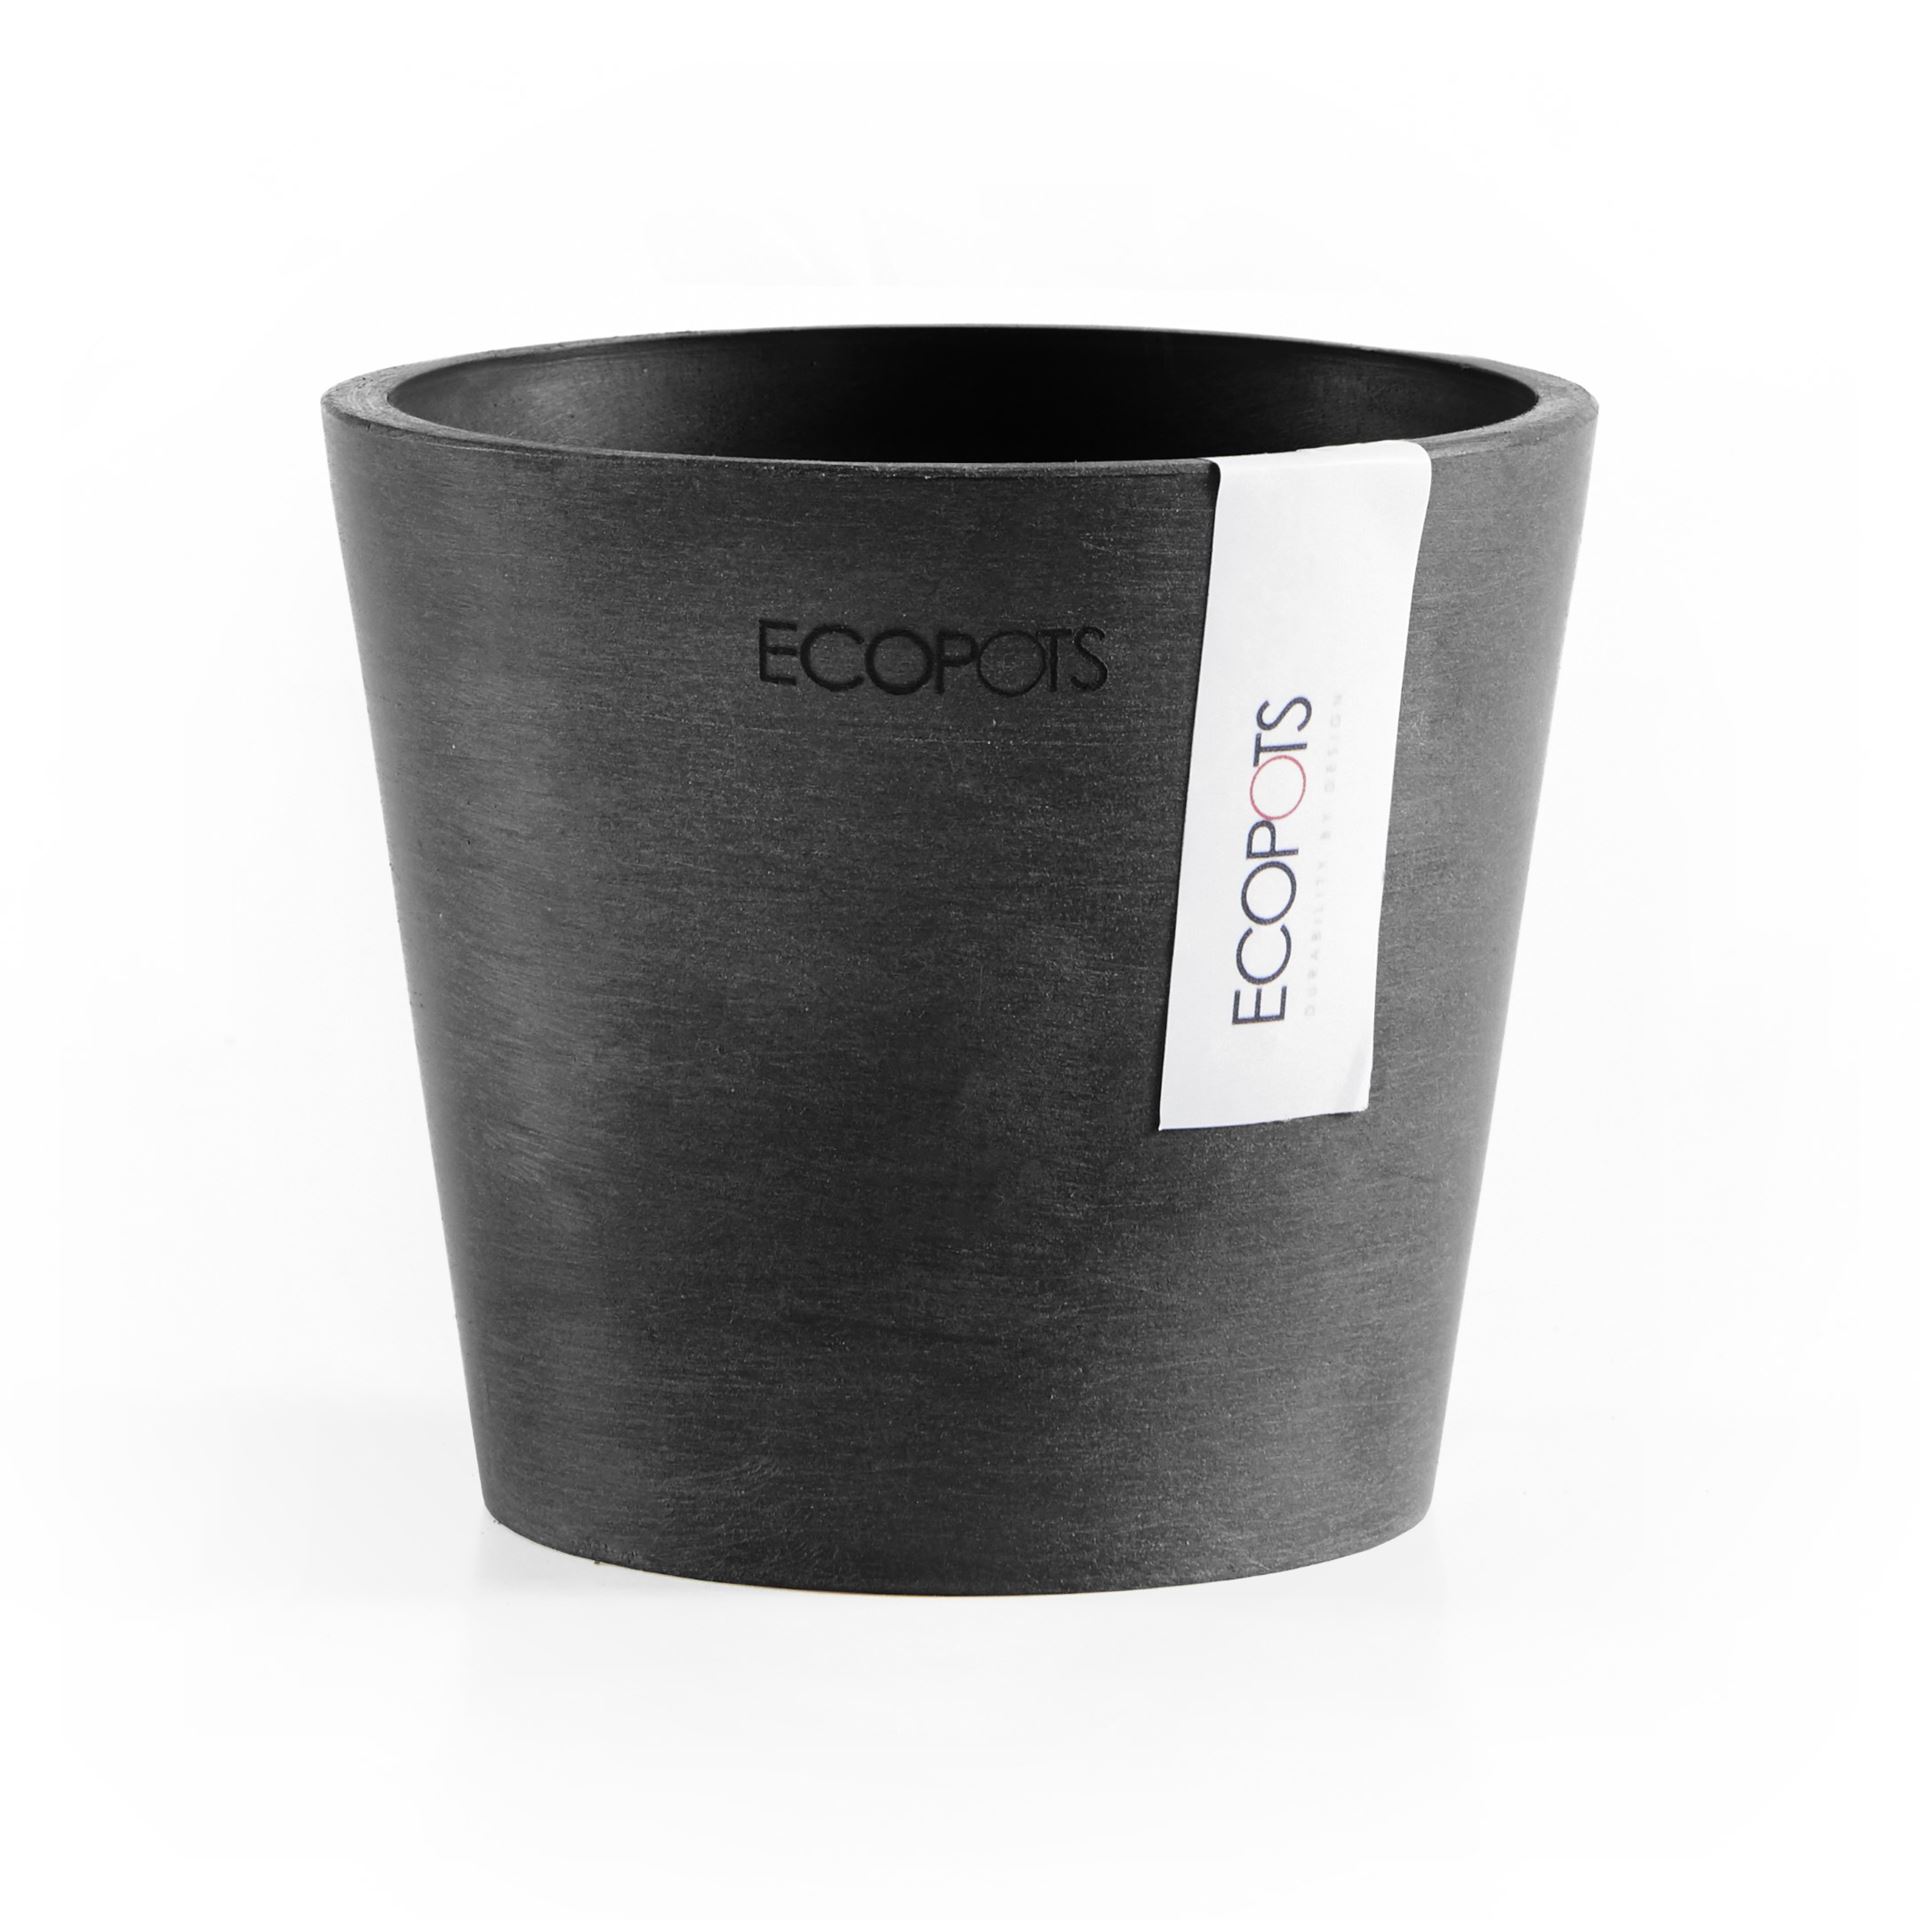 Ecopots-amsterdam-mini-dark-grey-10-5-cm-H9-2-cm